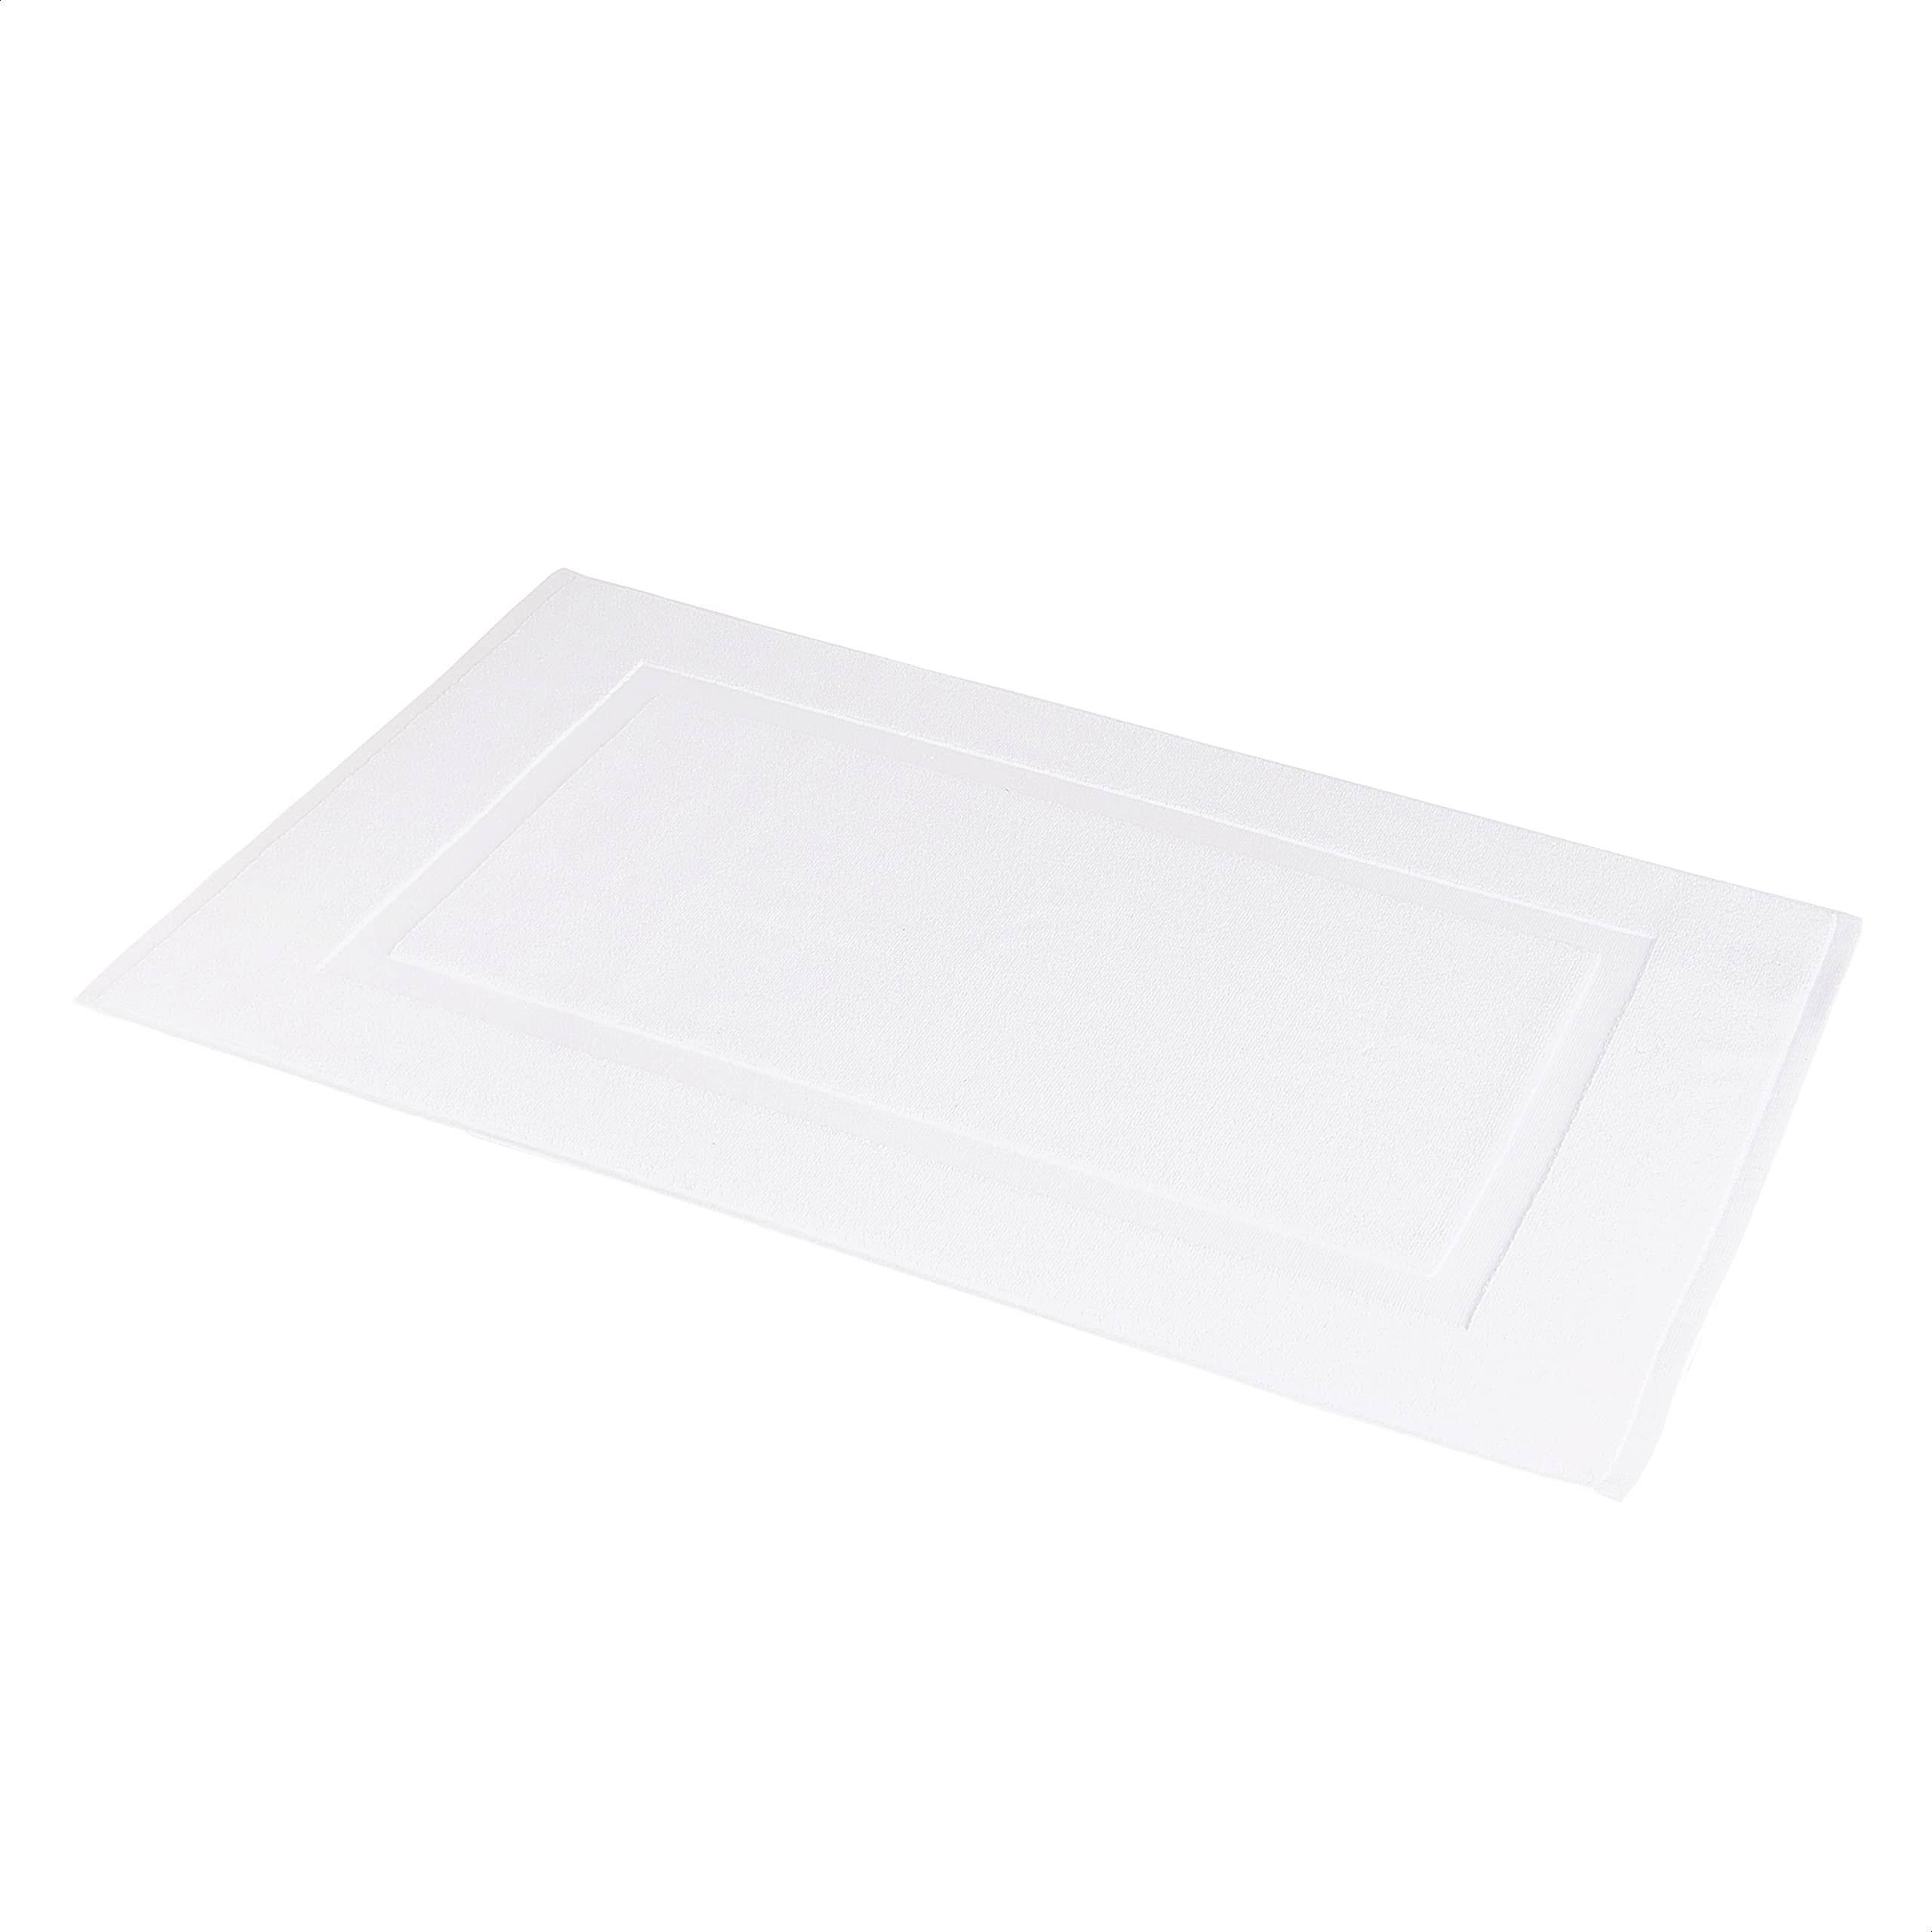 Bright White 20 x 31 inch Bath Mat - Machine Washable and OEKO-TEX Standard 100 Certified | Image